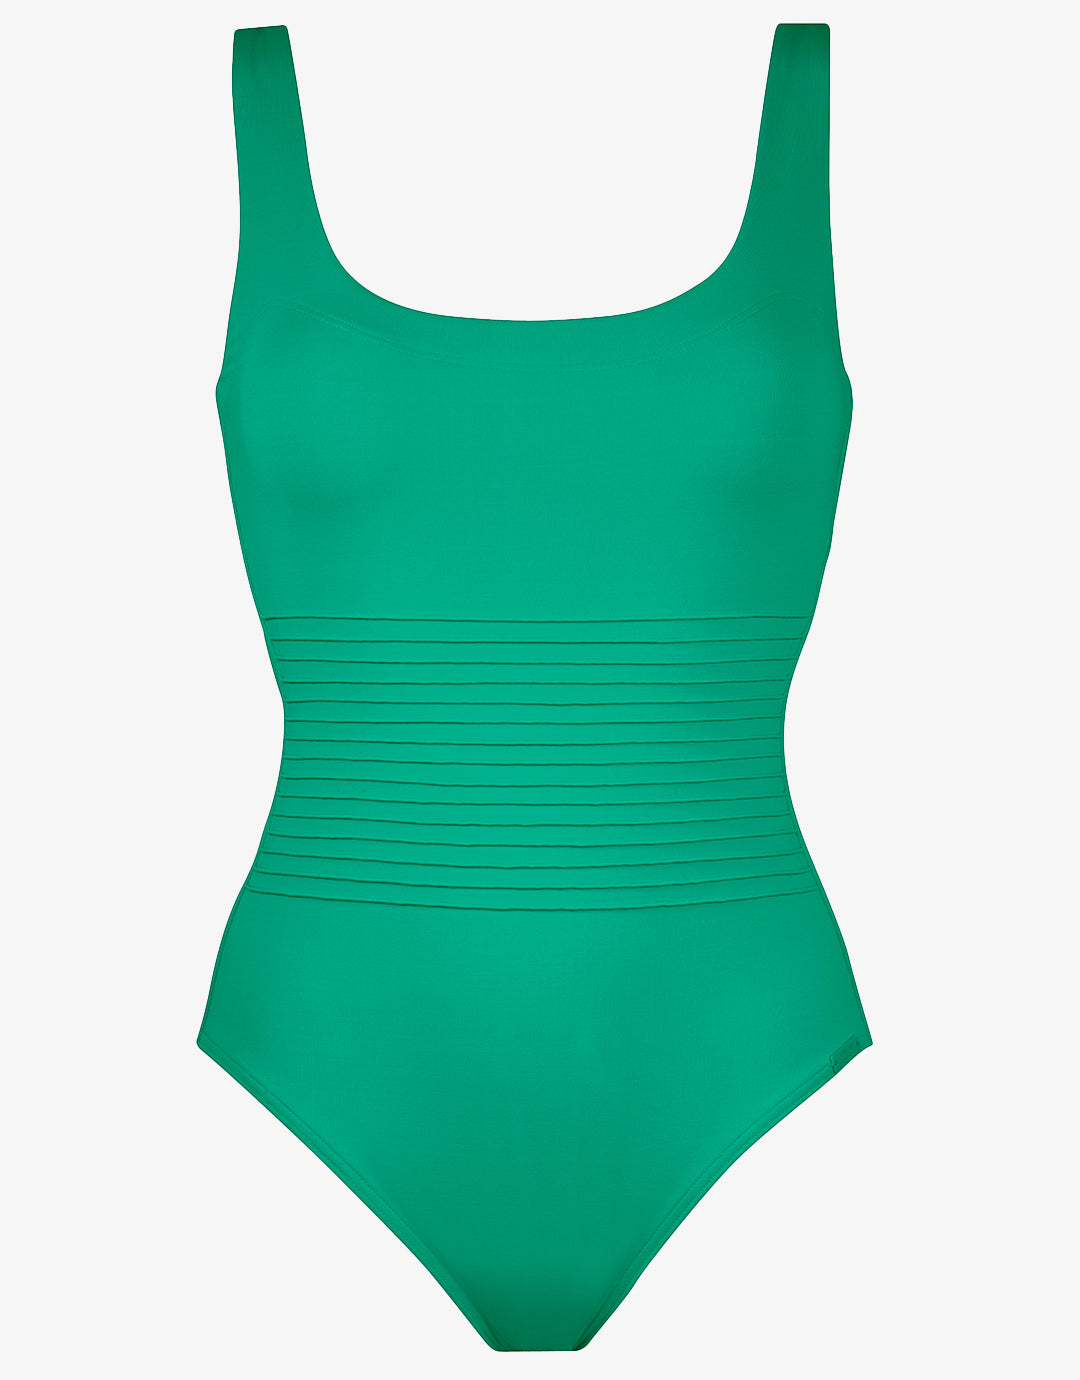 Softline Tank Swimsuit - Verdant - Simply Beach UK